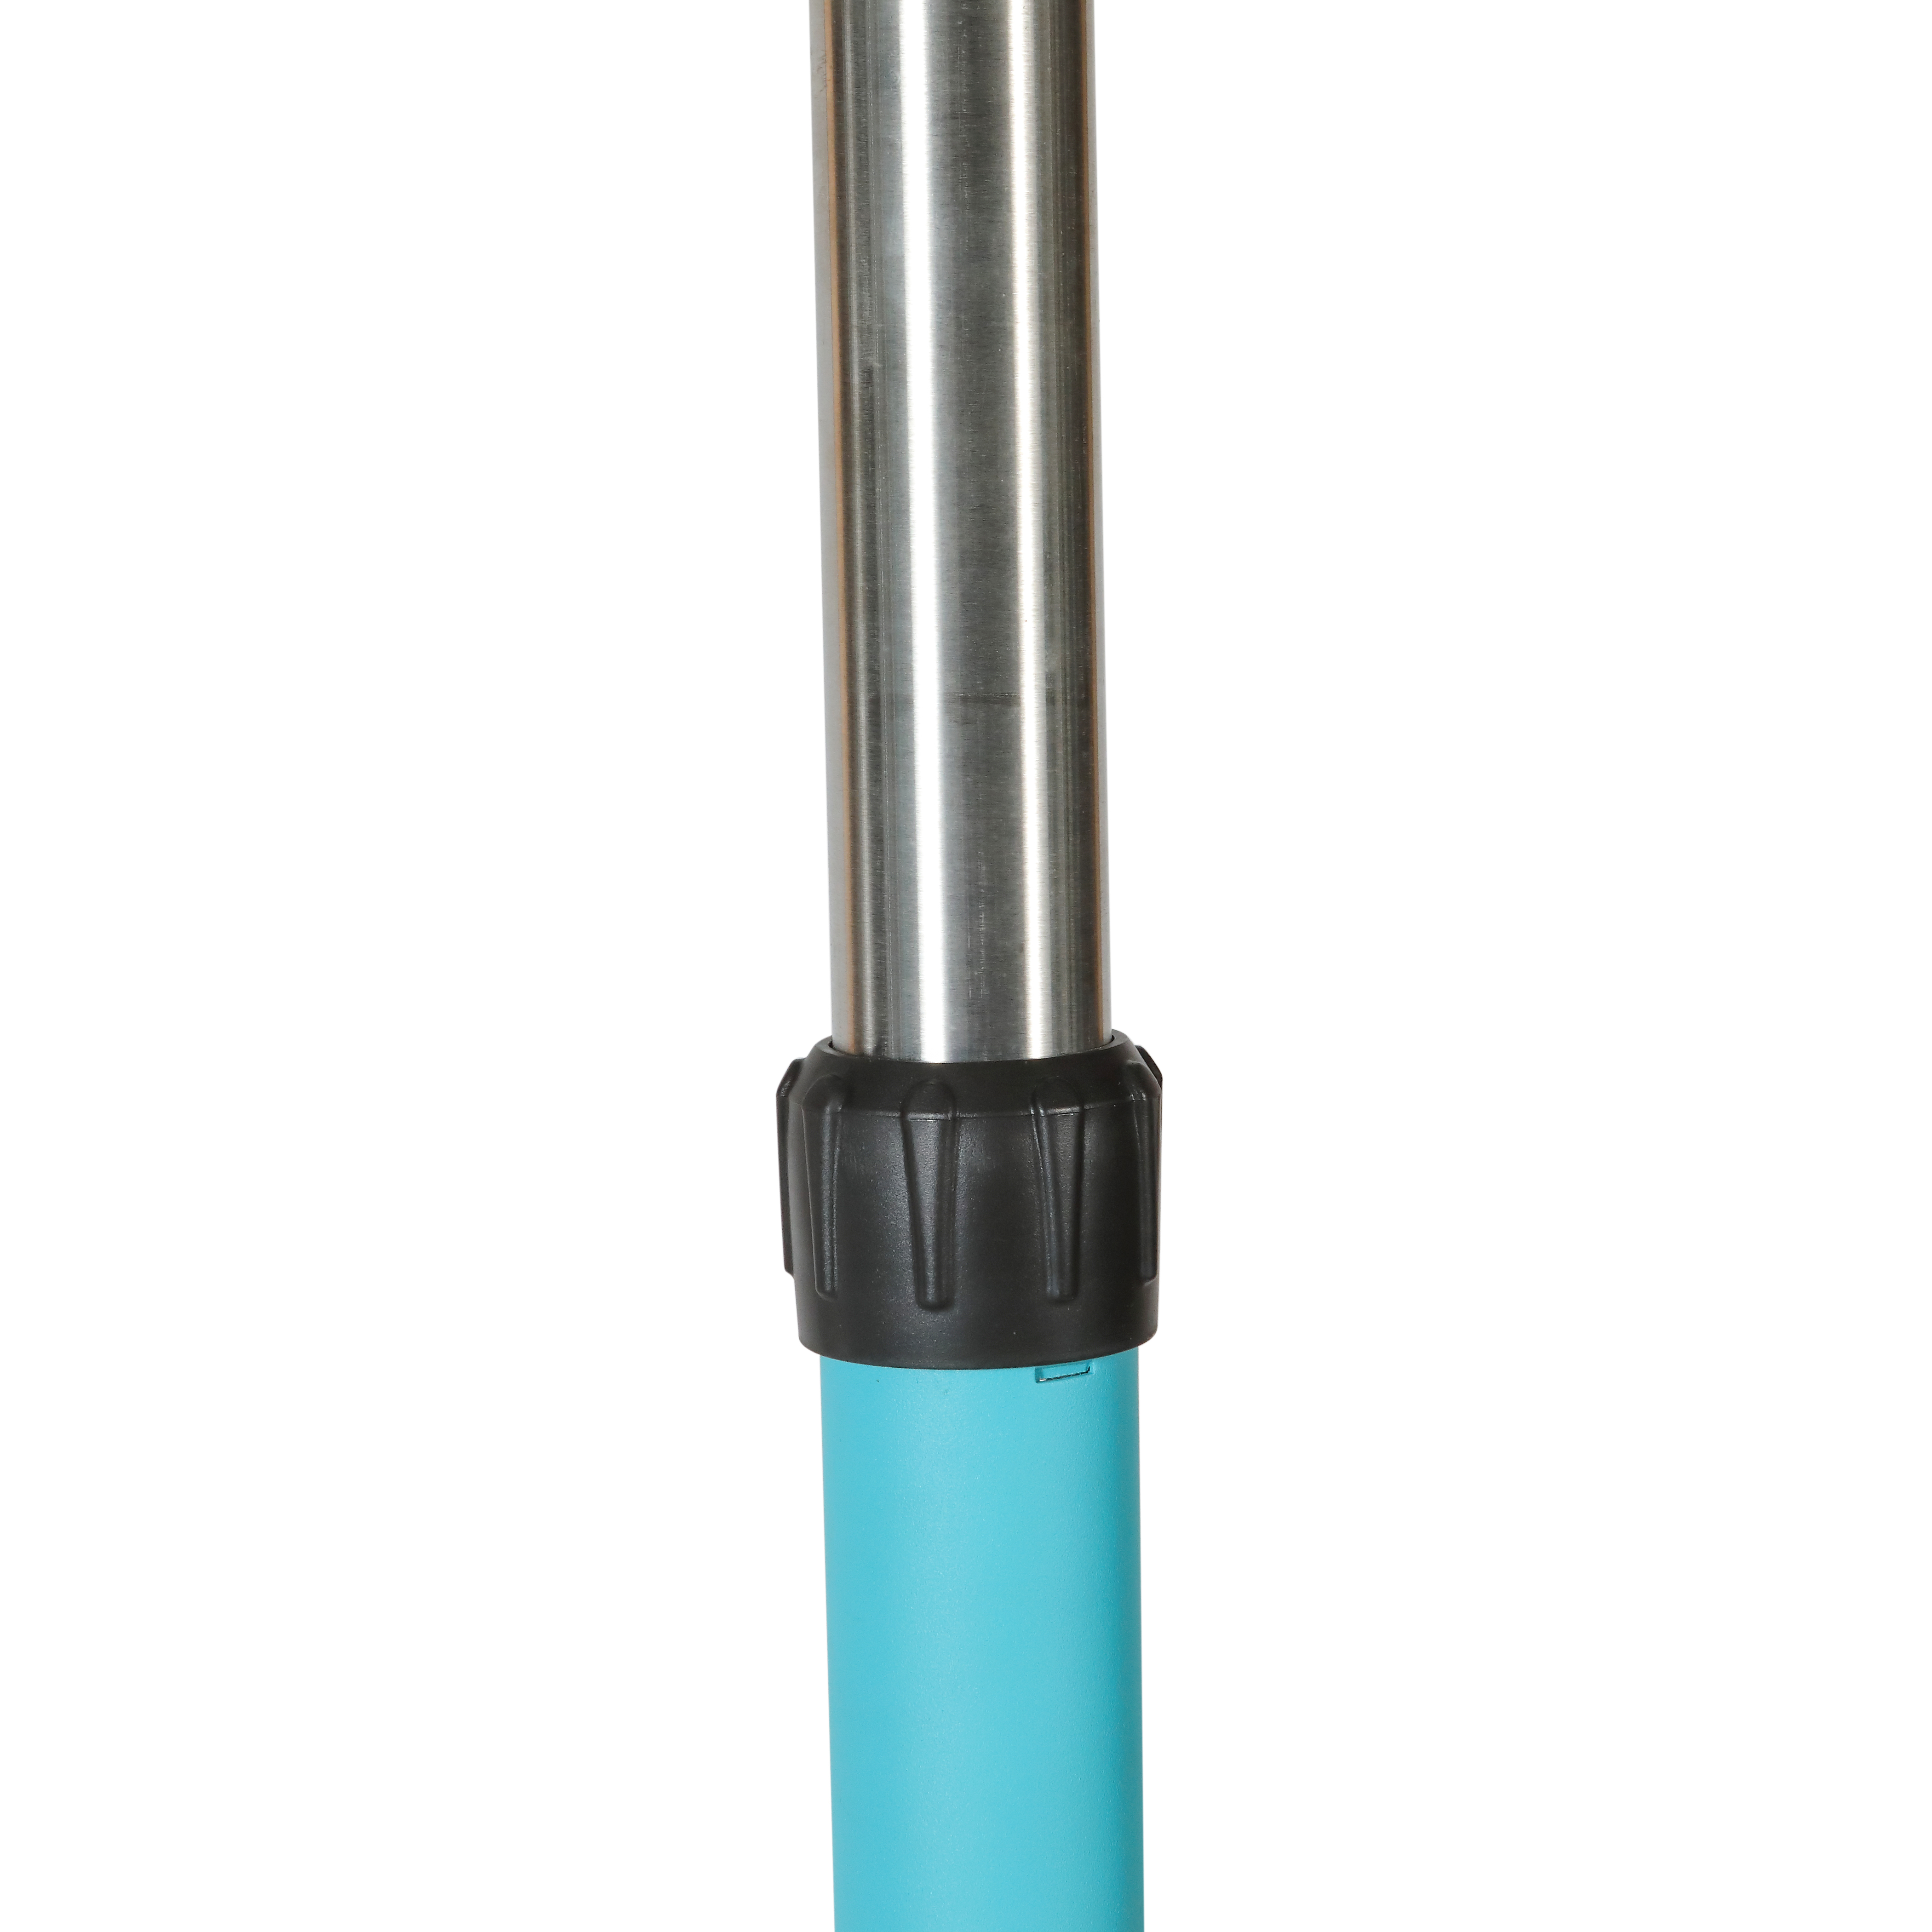 Umbrella Type Electric Heater (blue)